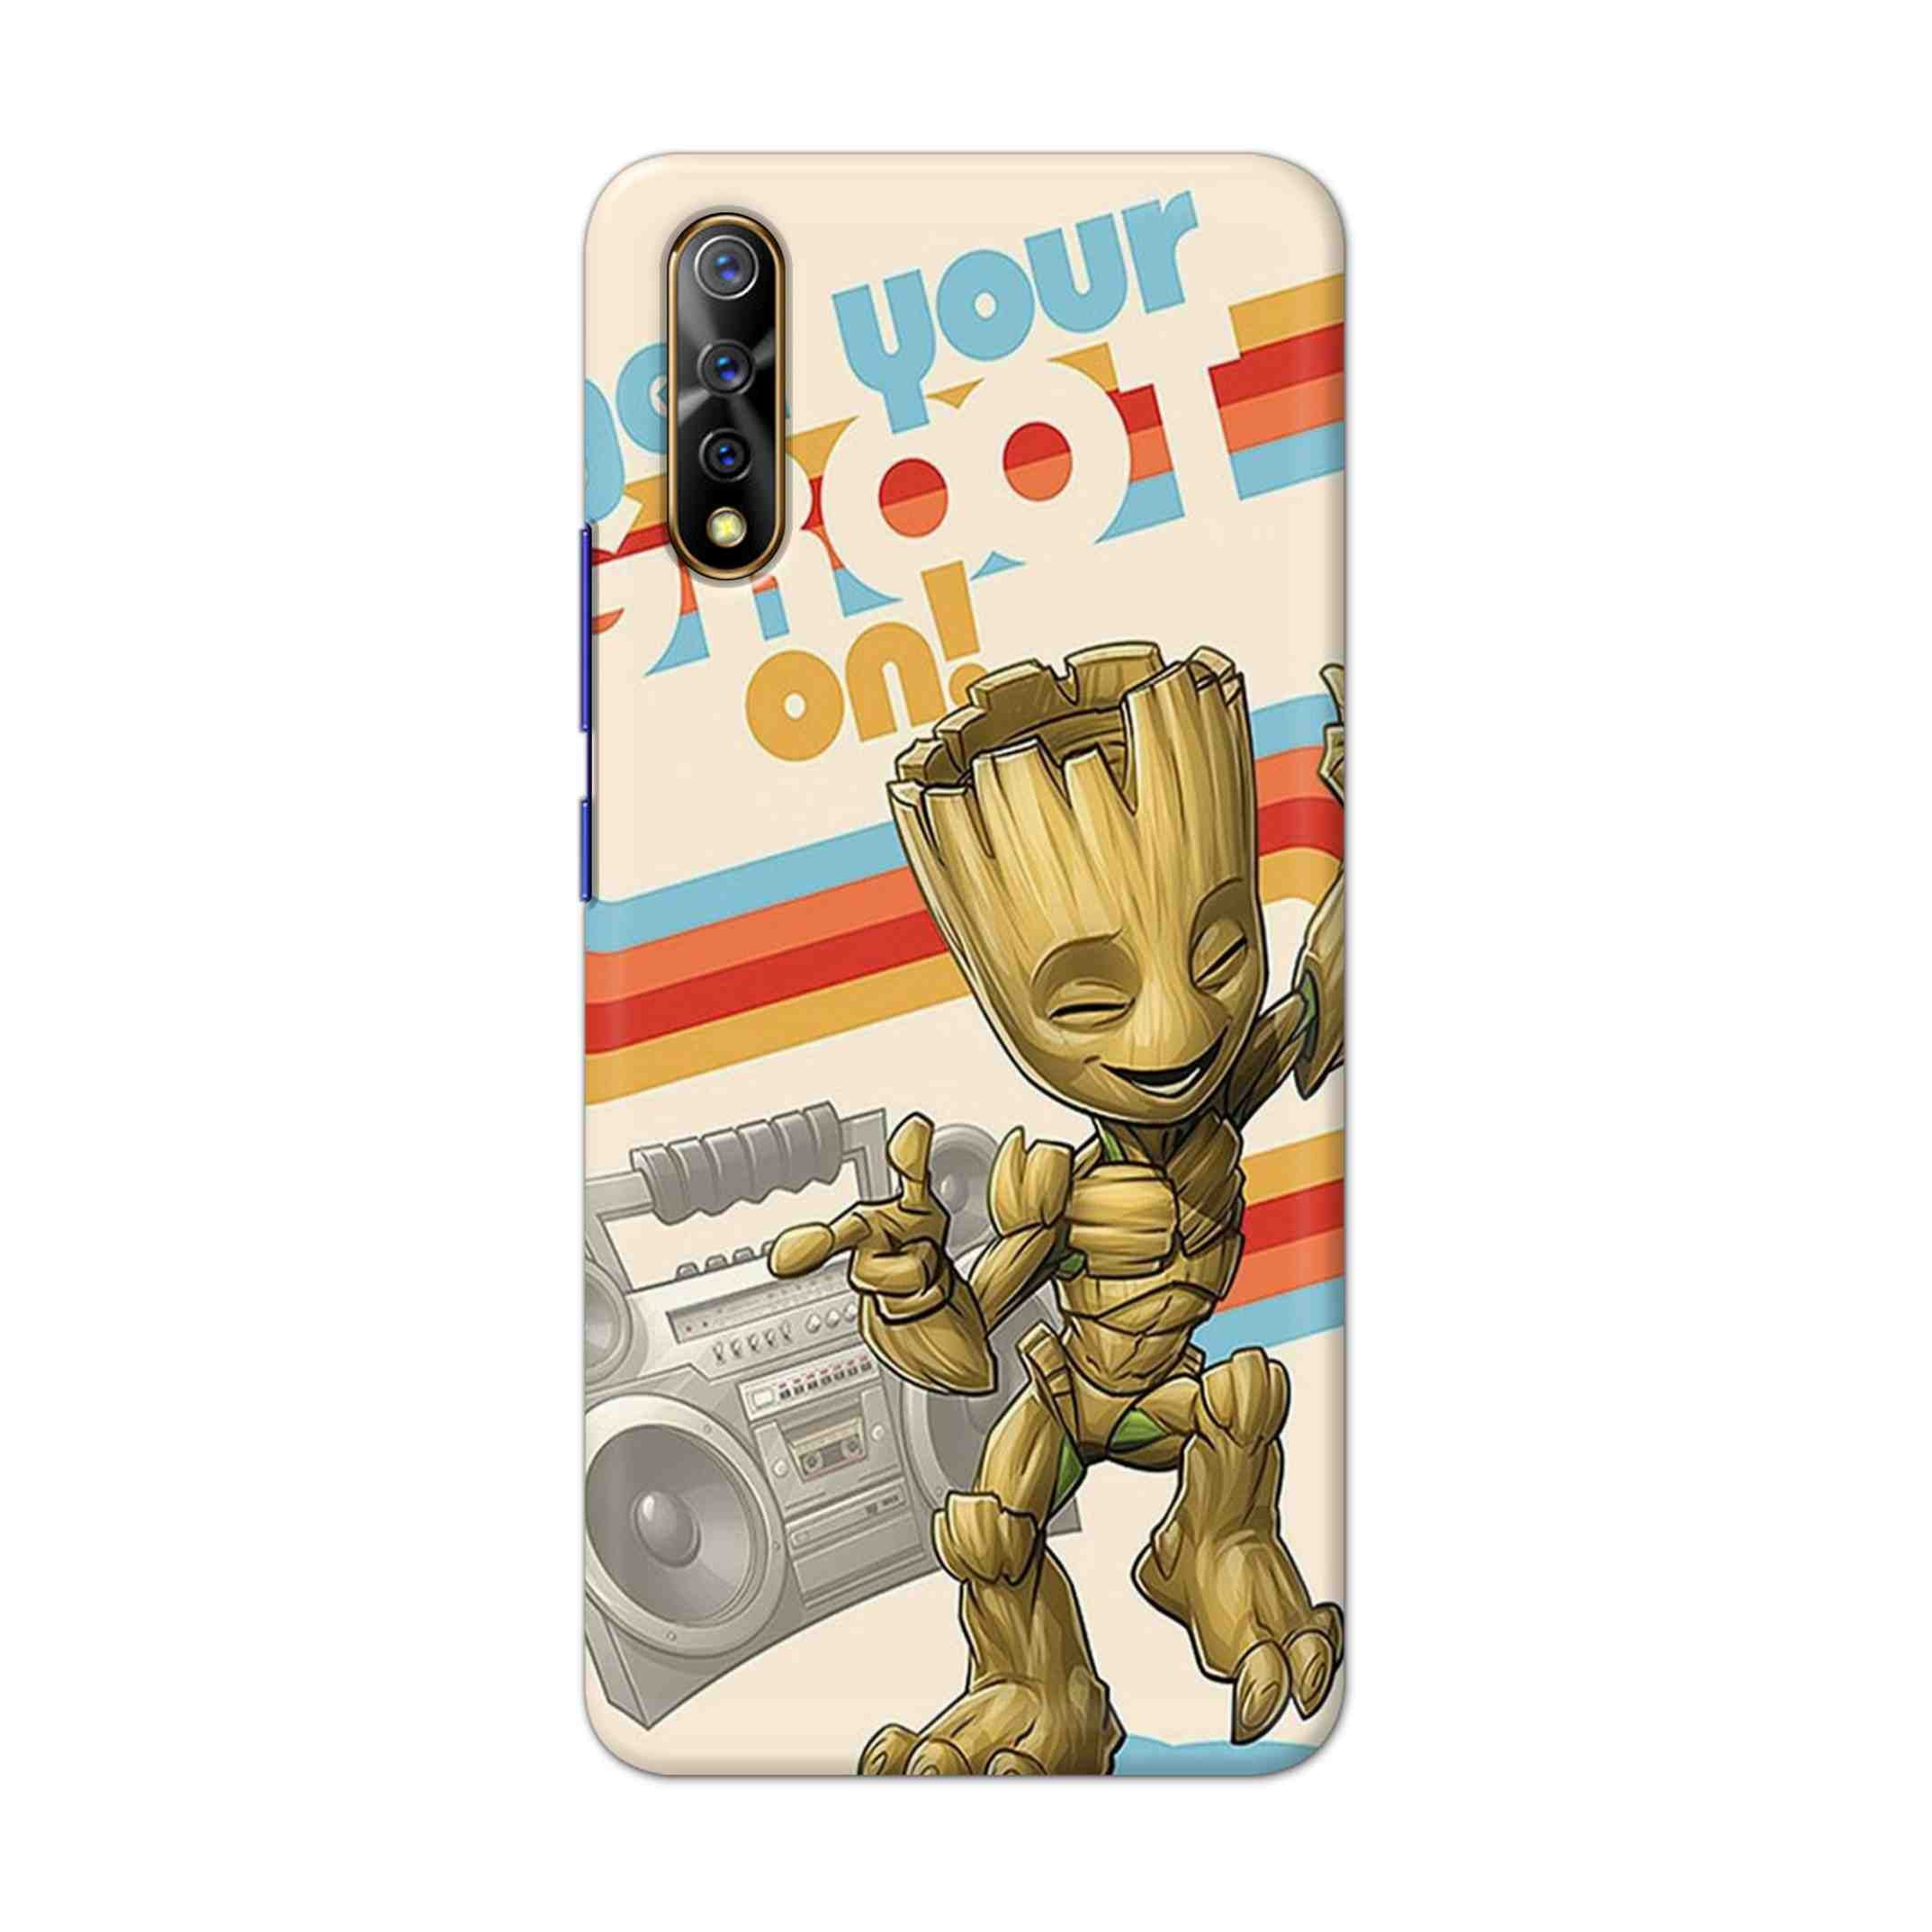 Buy Groot Hard Back Mobile Phone Case Cover For Vivo S1 / Z1x Online